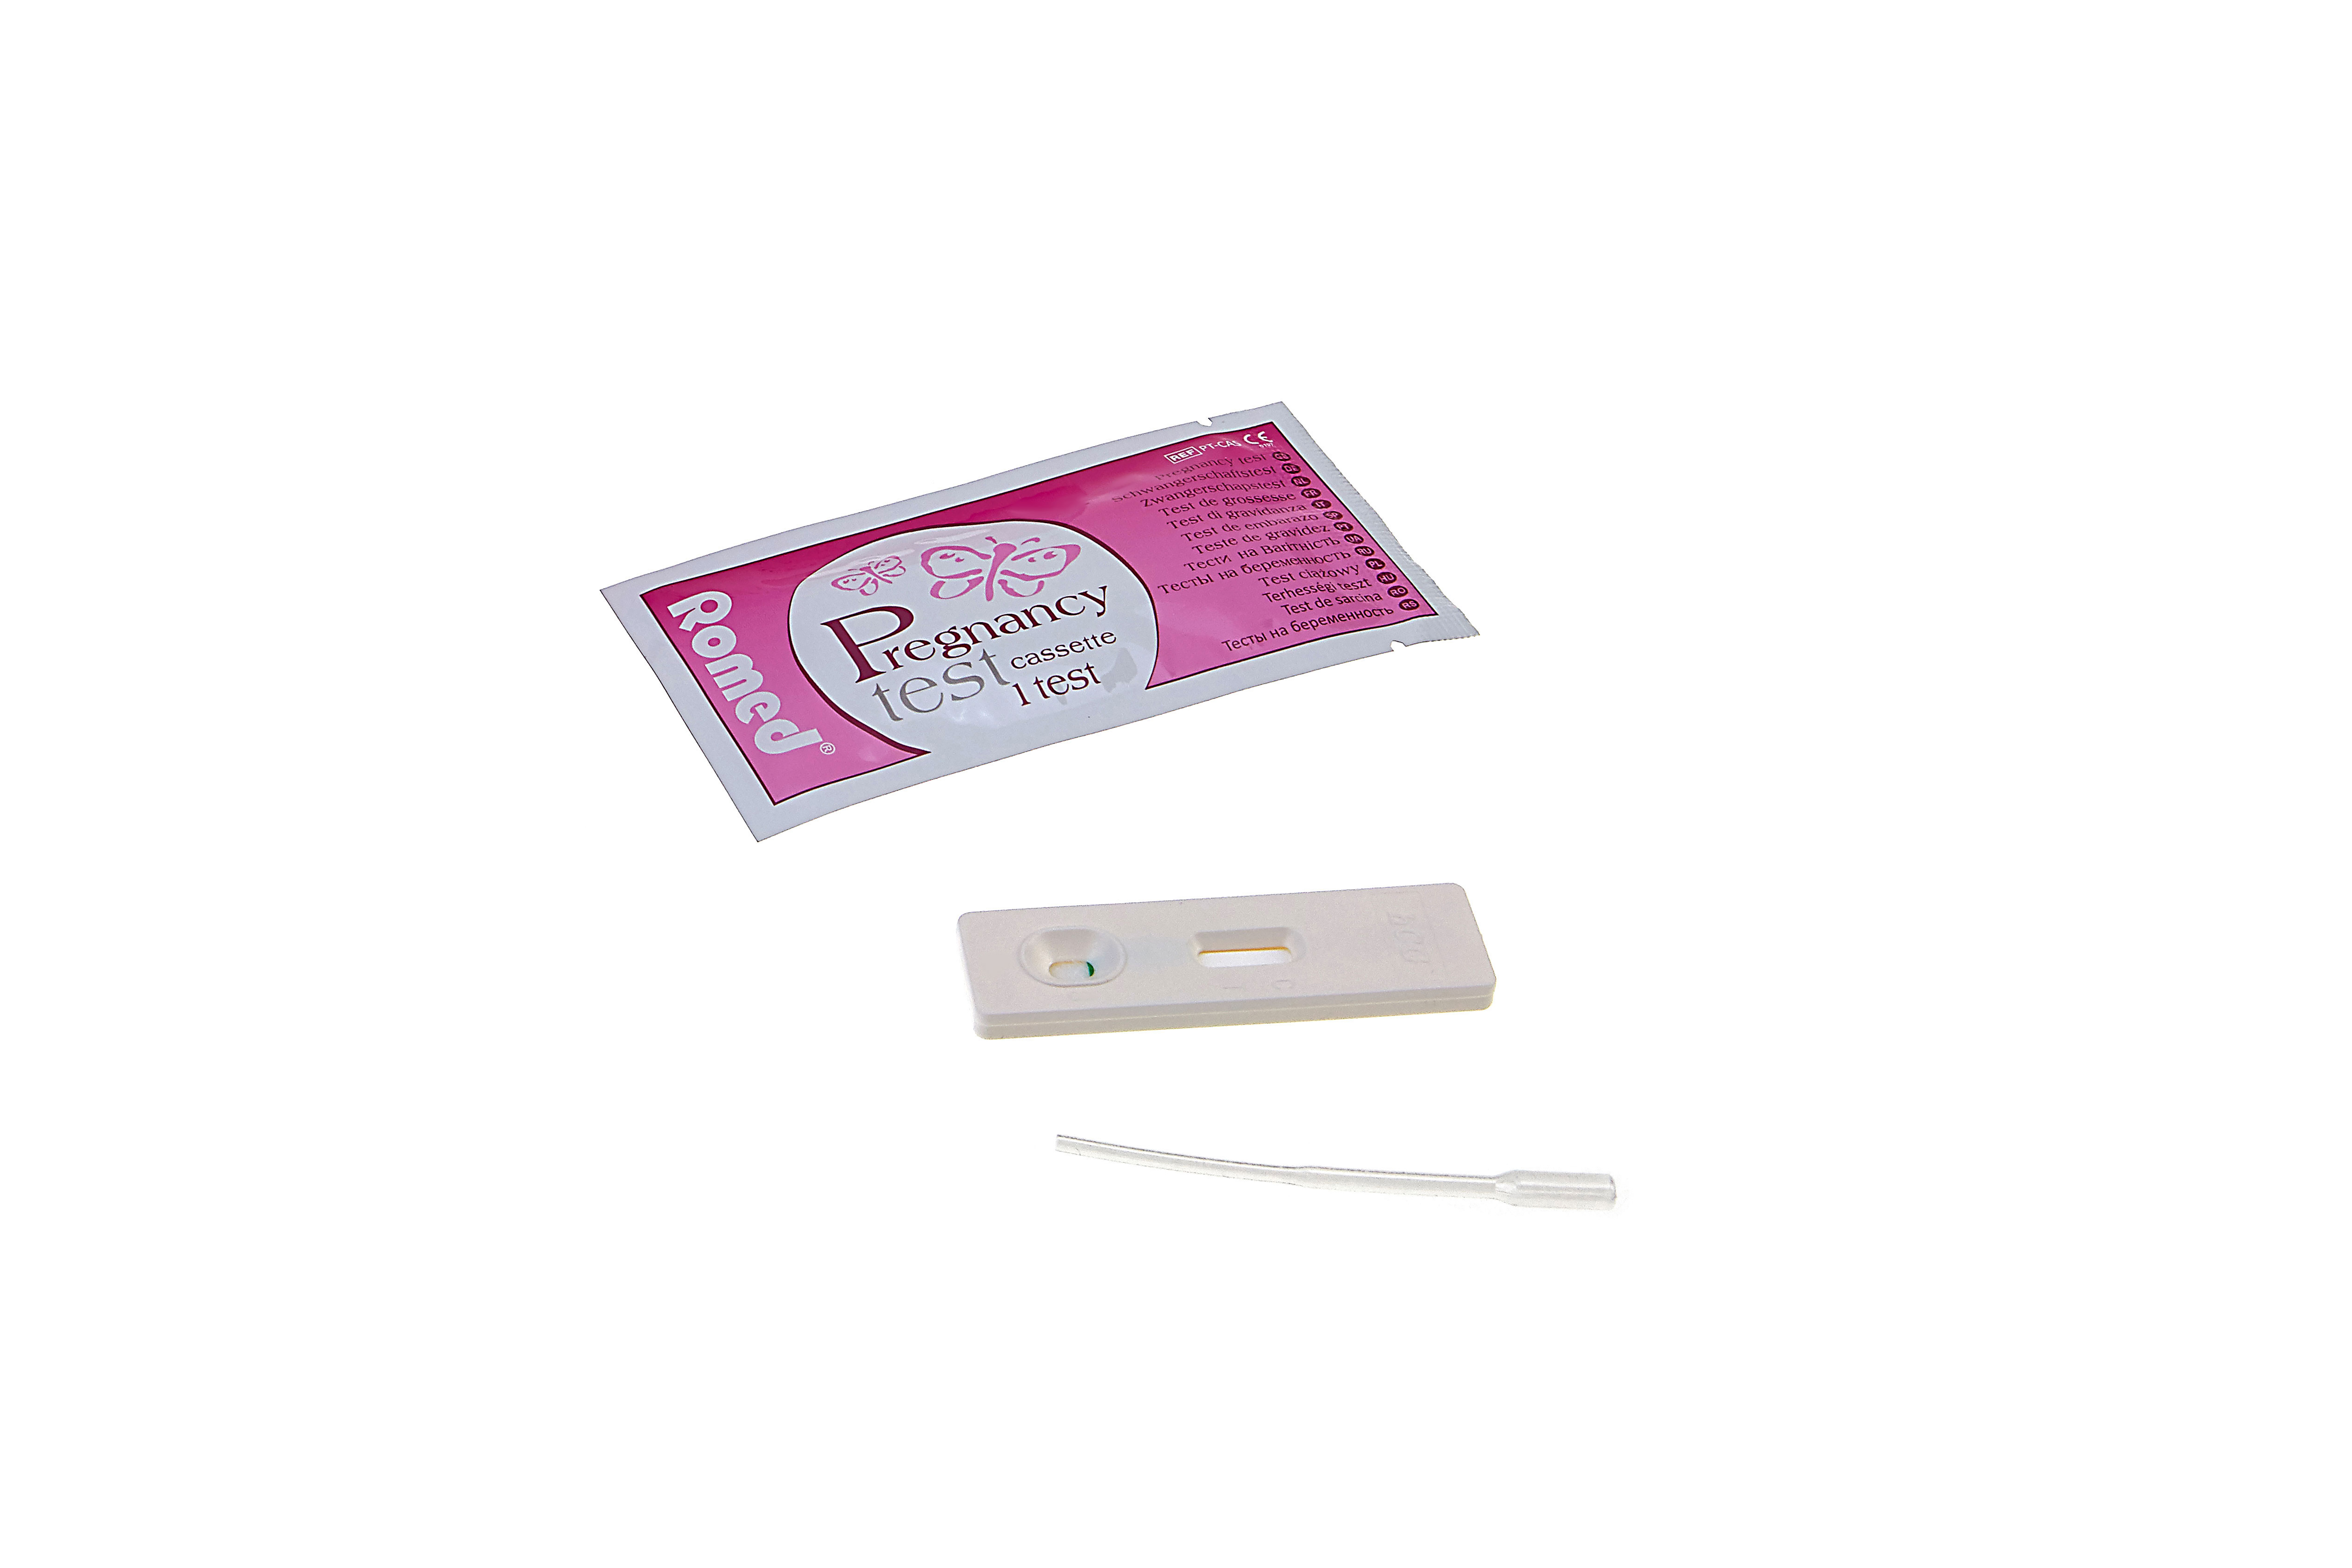 PT-CAS1000 Romed zwangerschapstesten, cassette type, bulk verpakt, 1.000 stuks in een karton.